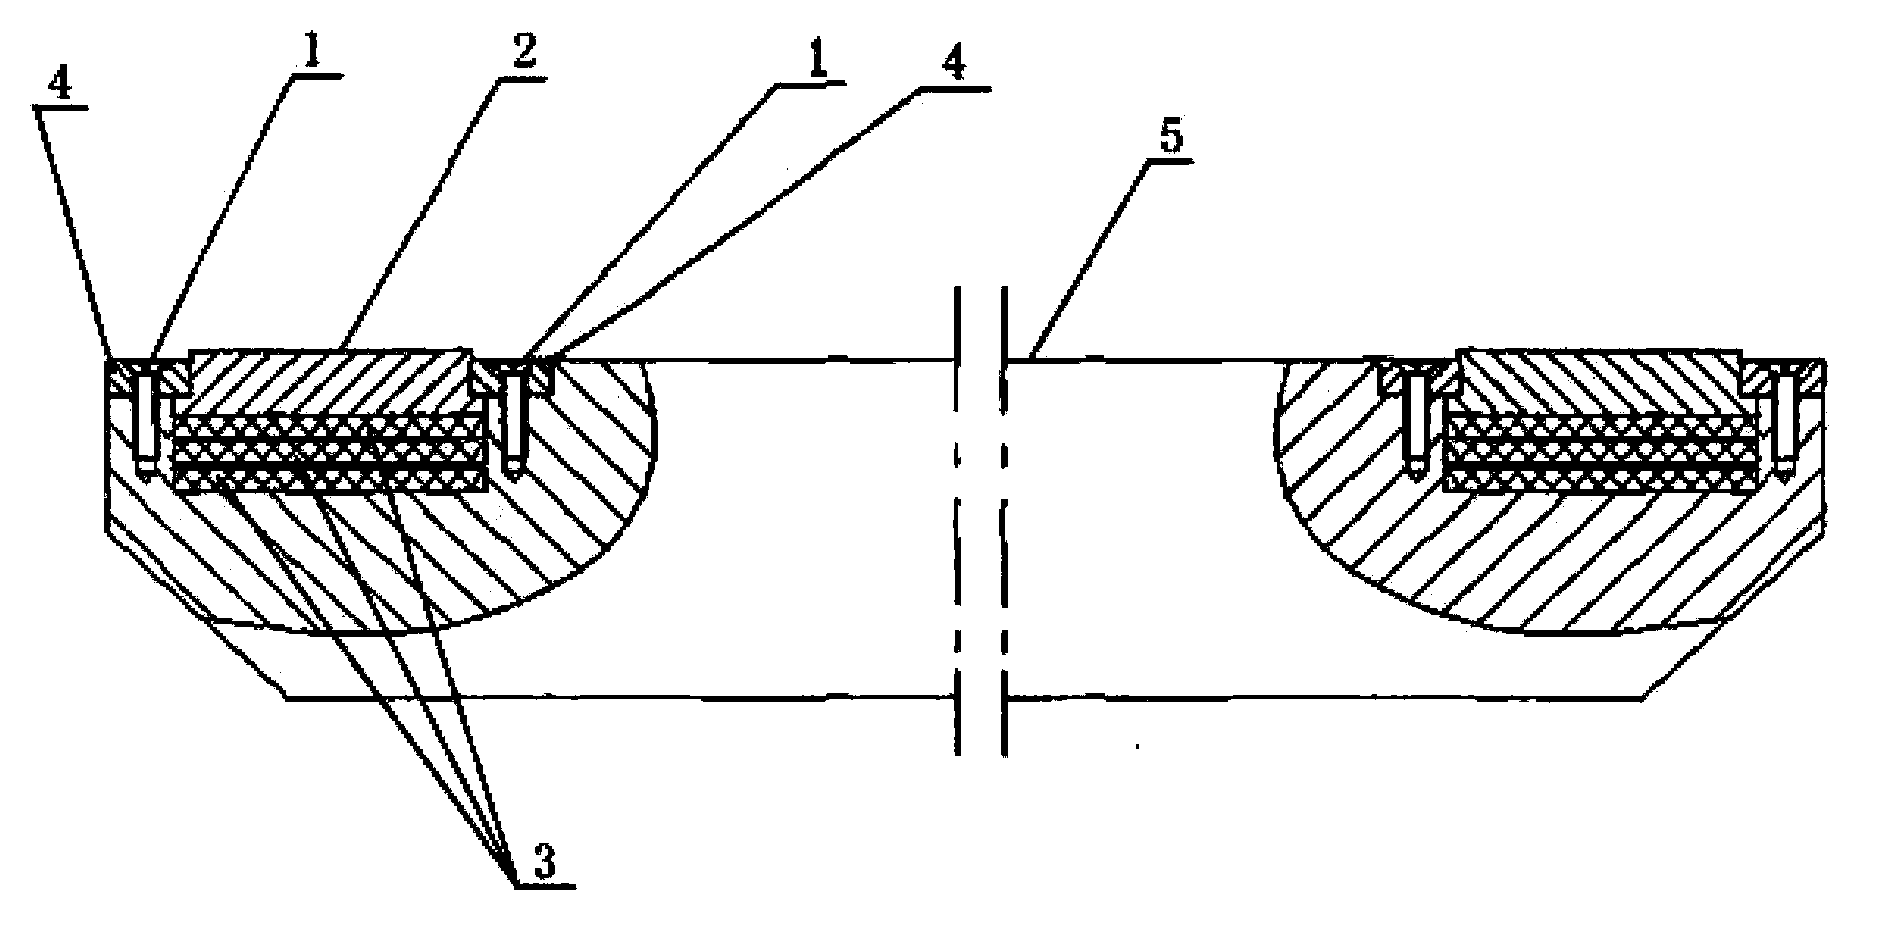 Horizontal hitting rod structure of press machine